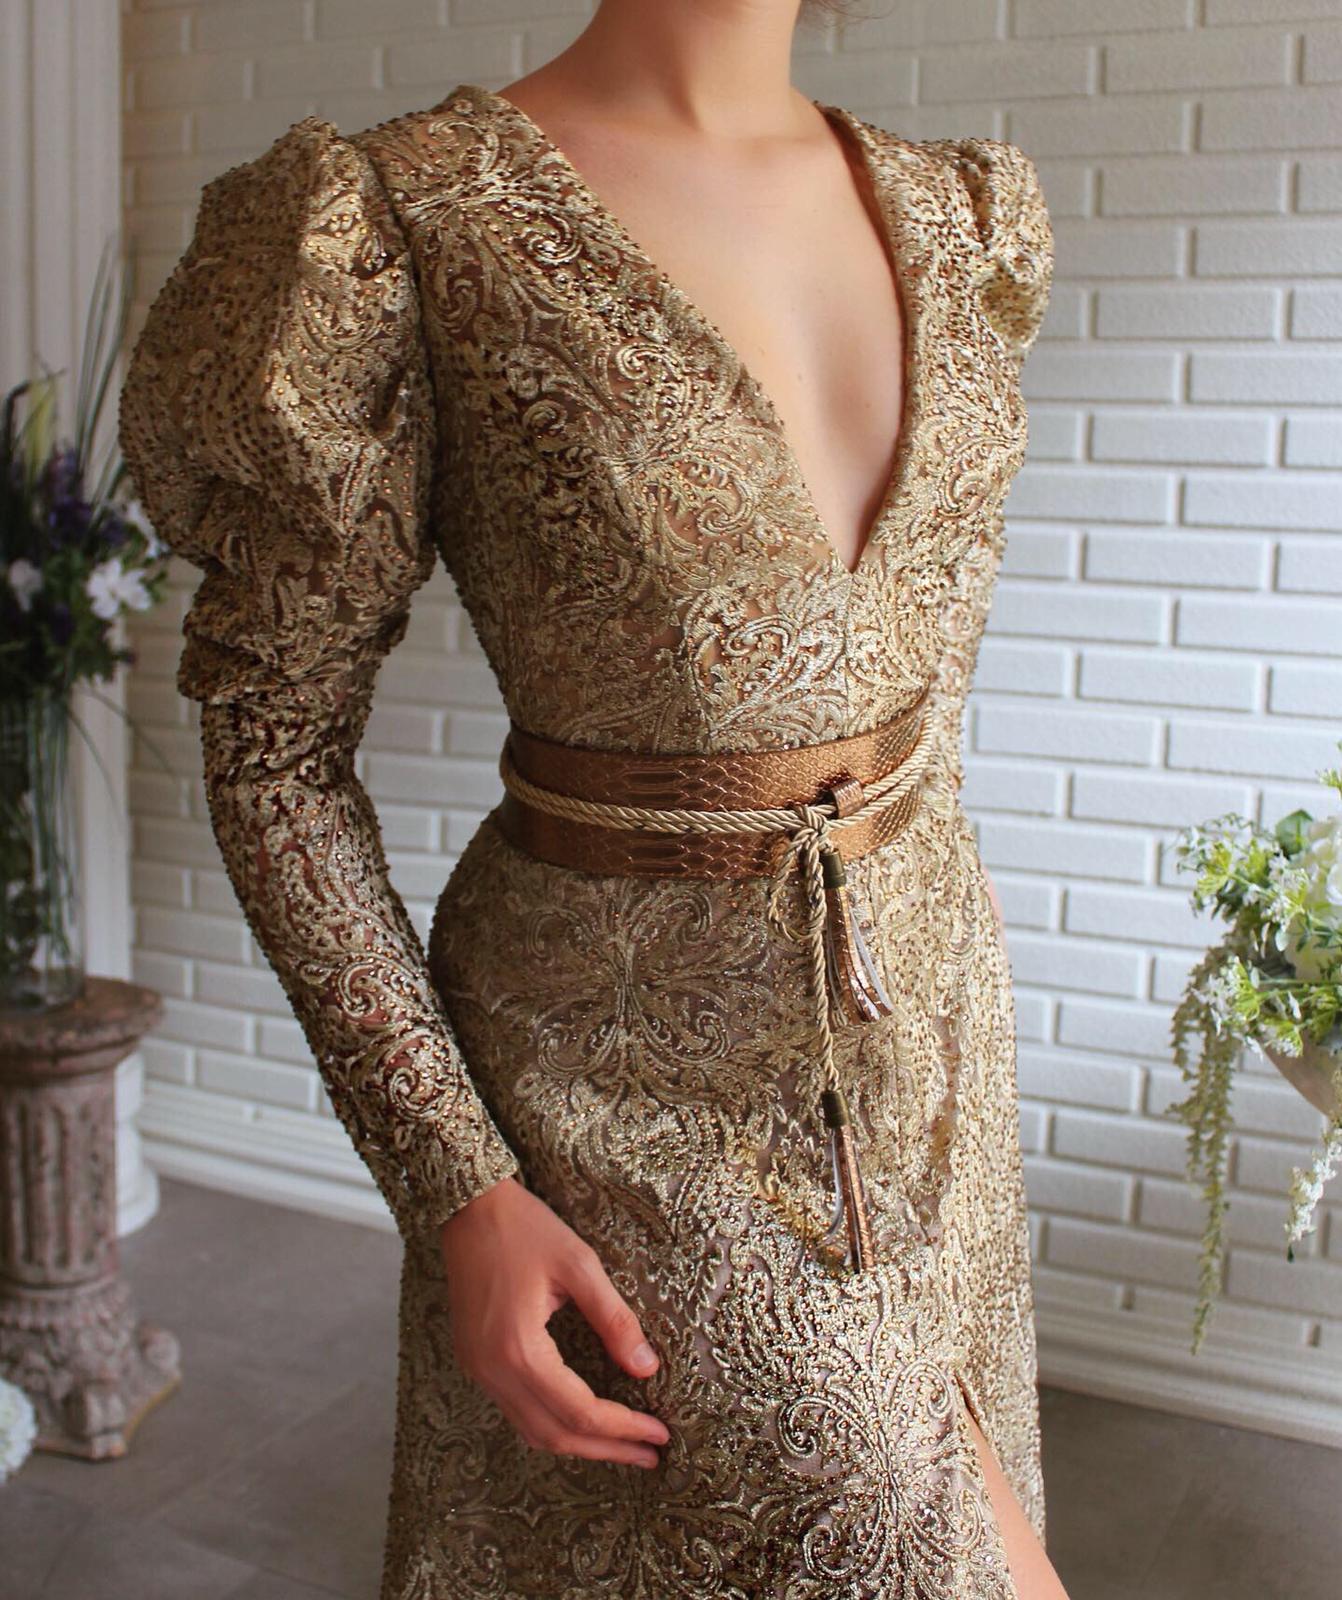 Beige A-Line dress with long sleeves, v-neck and belt